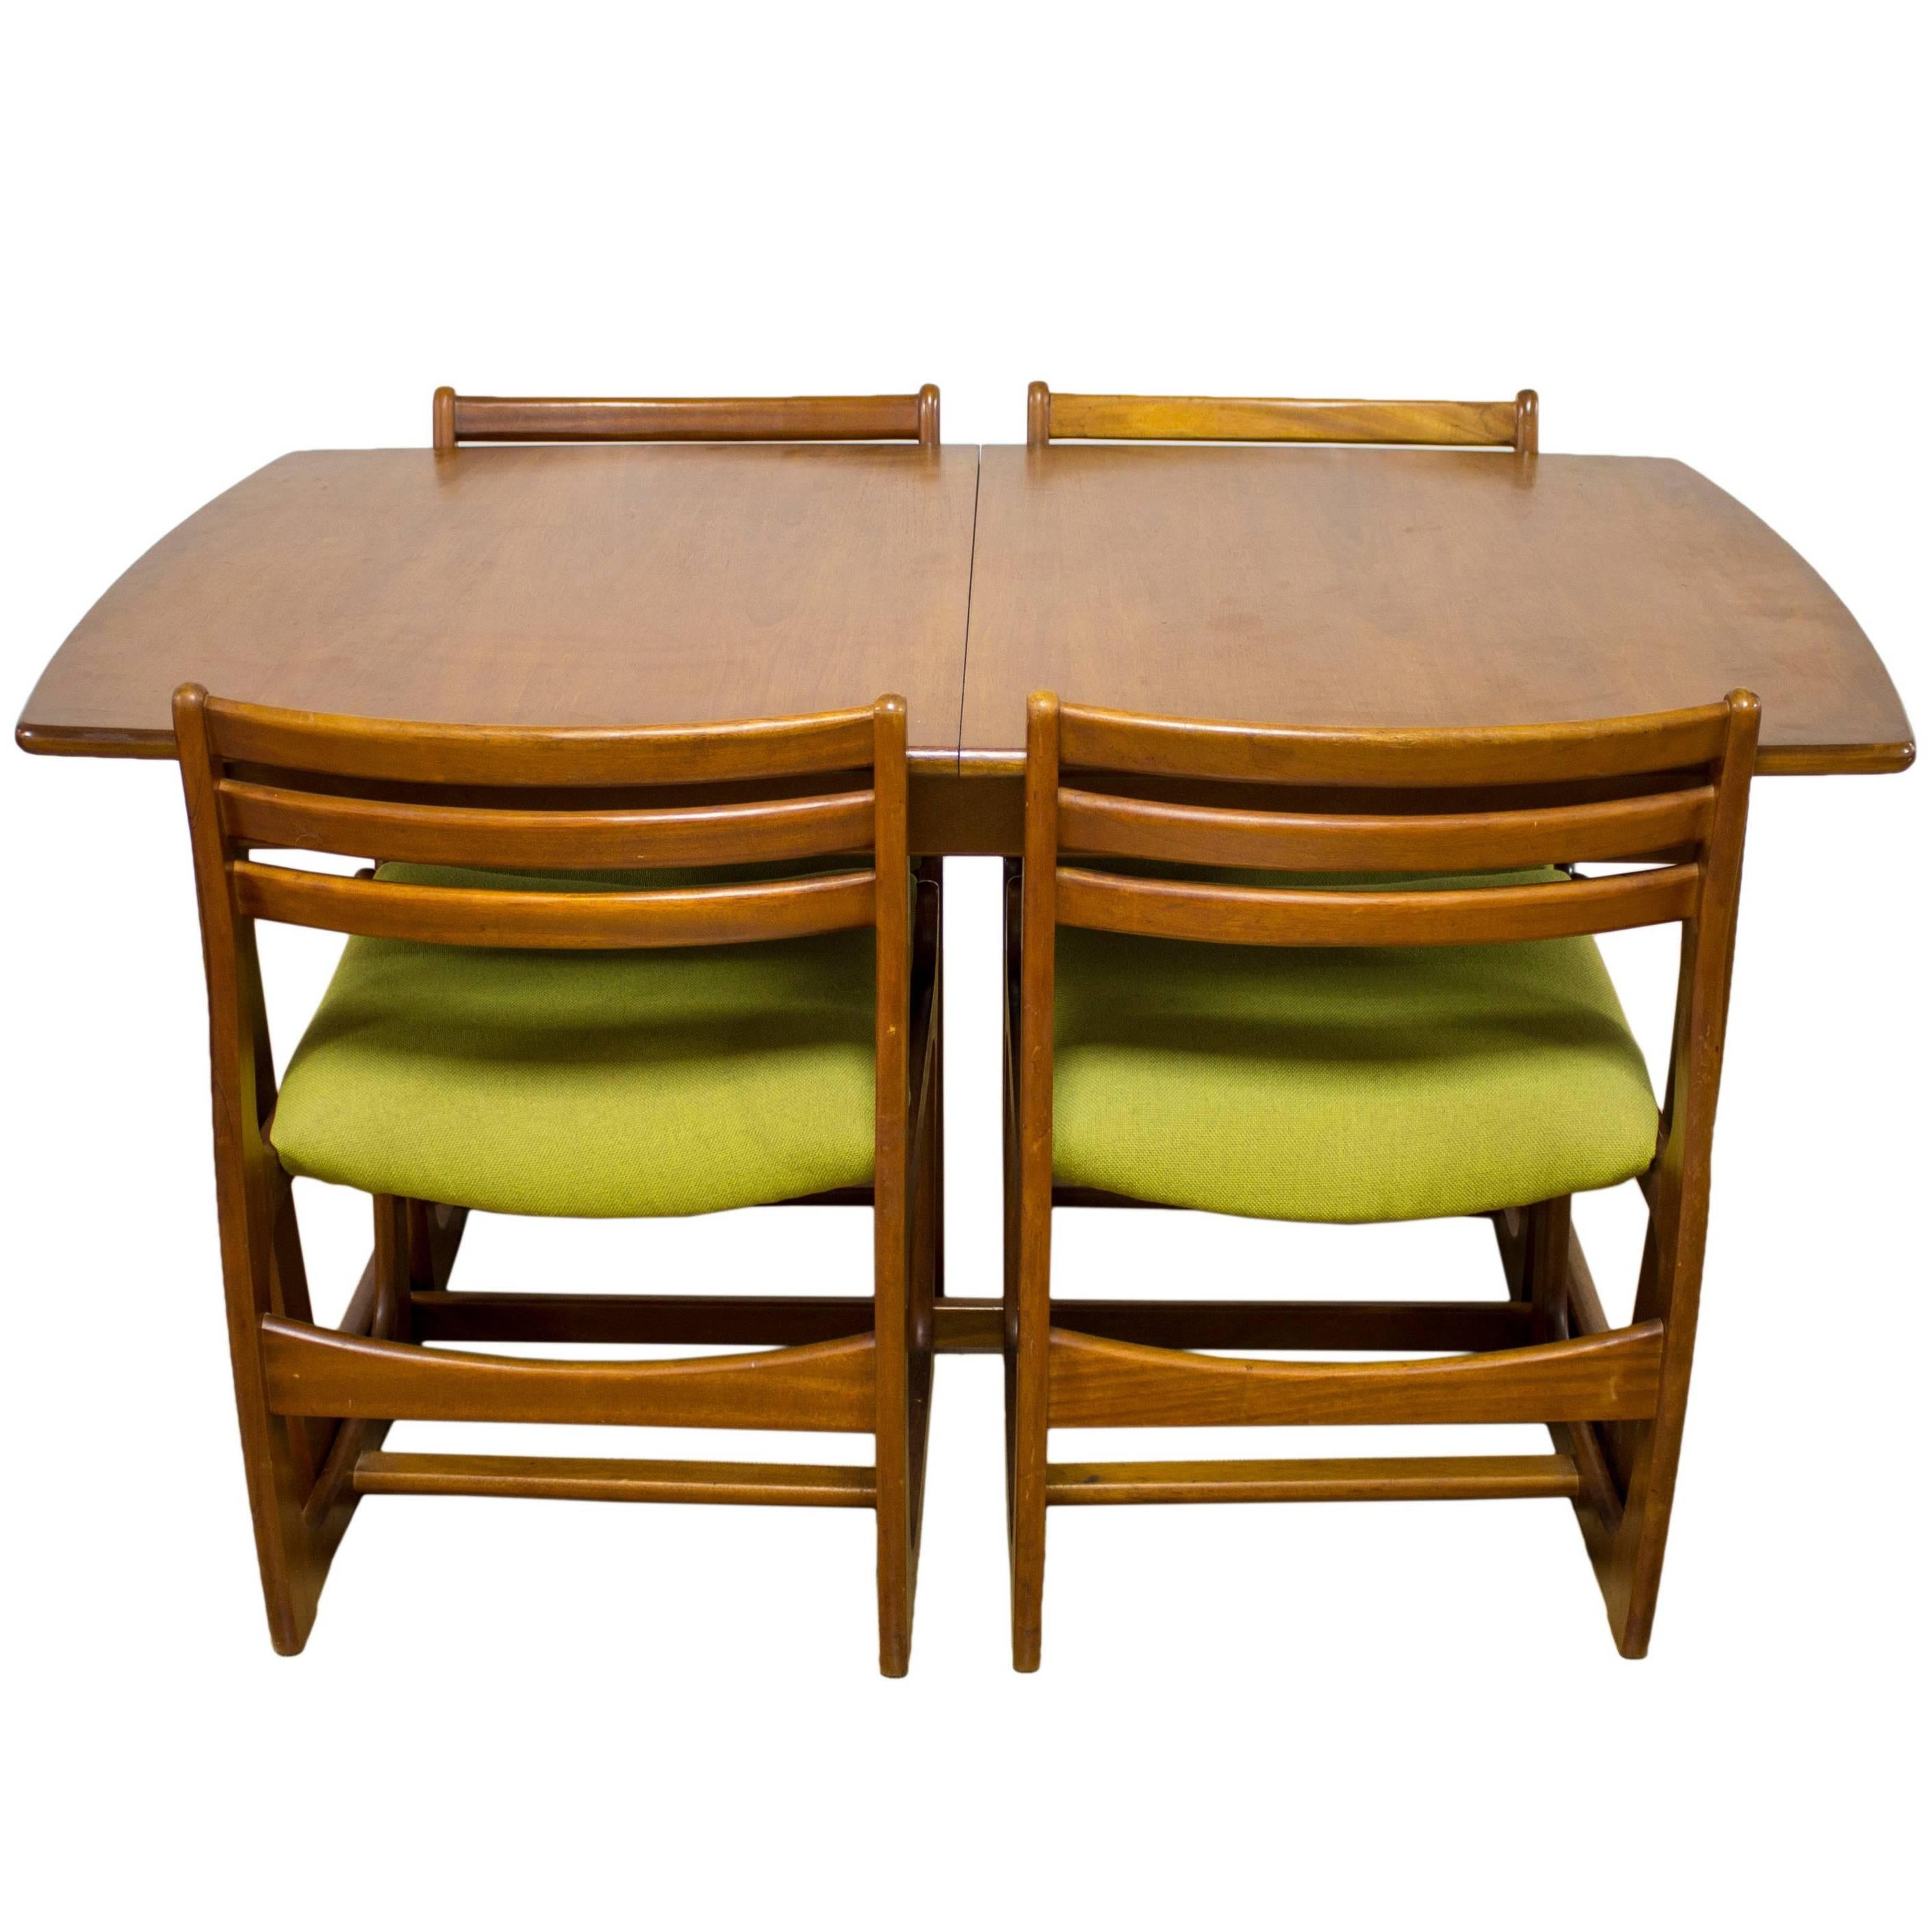 Portwood Teak Mid-Century Dining Table Four Chairs Retro Danish G Plan Era